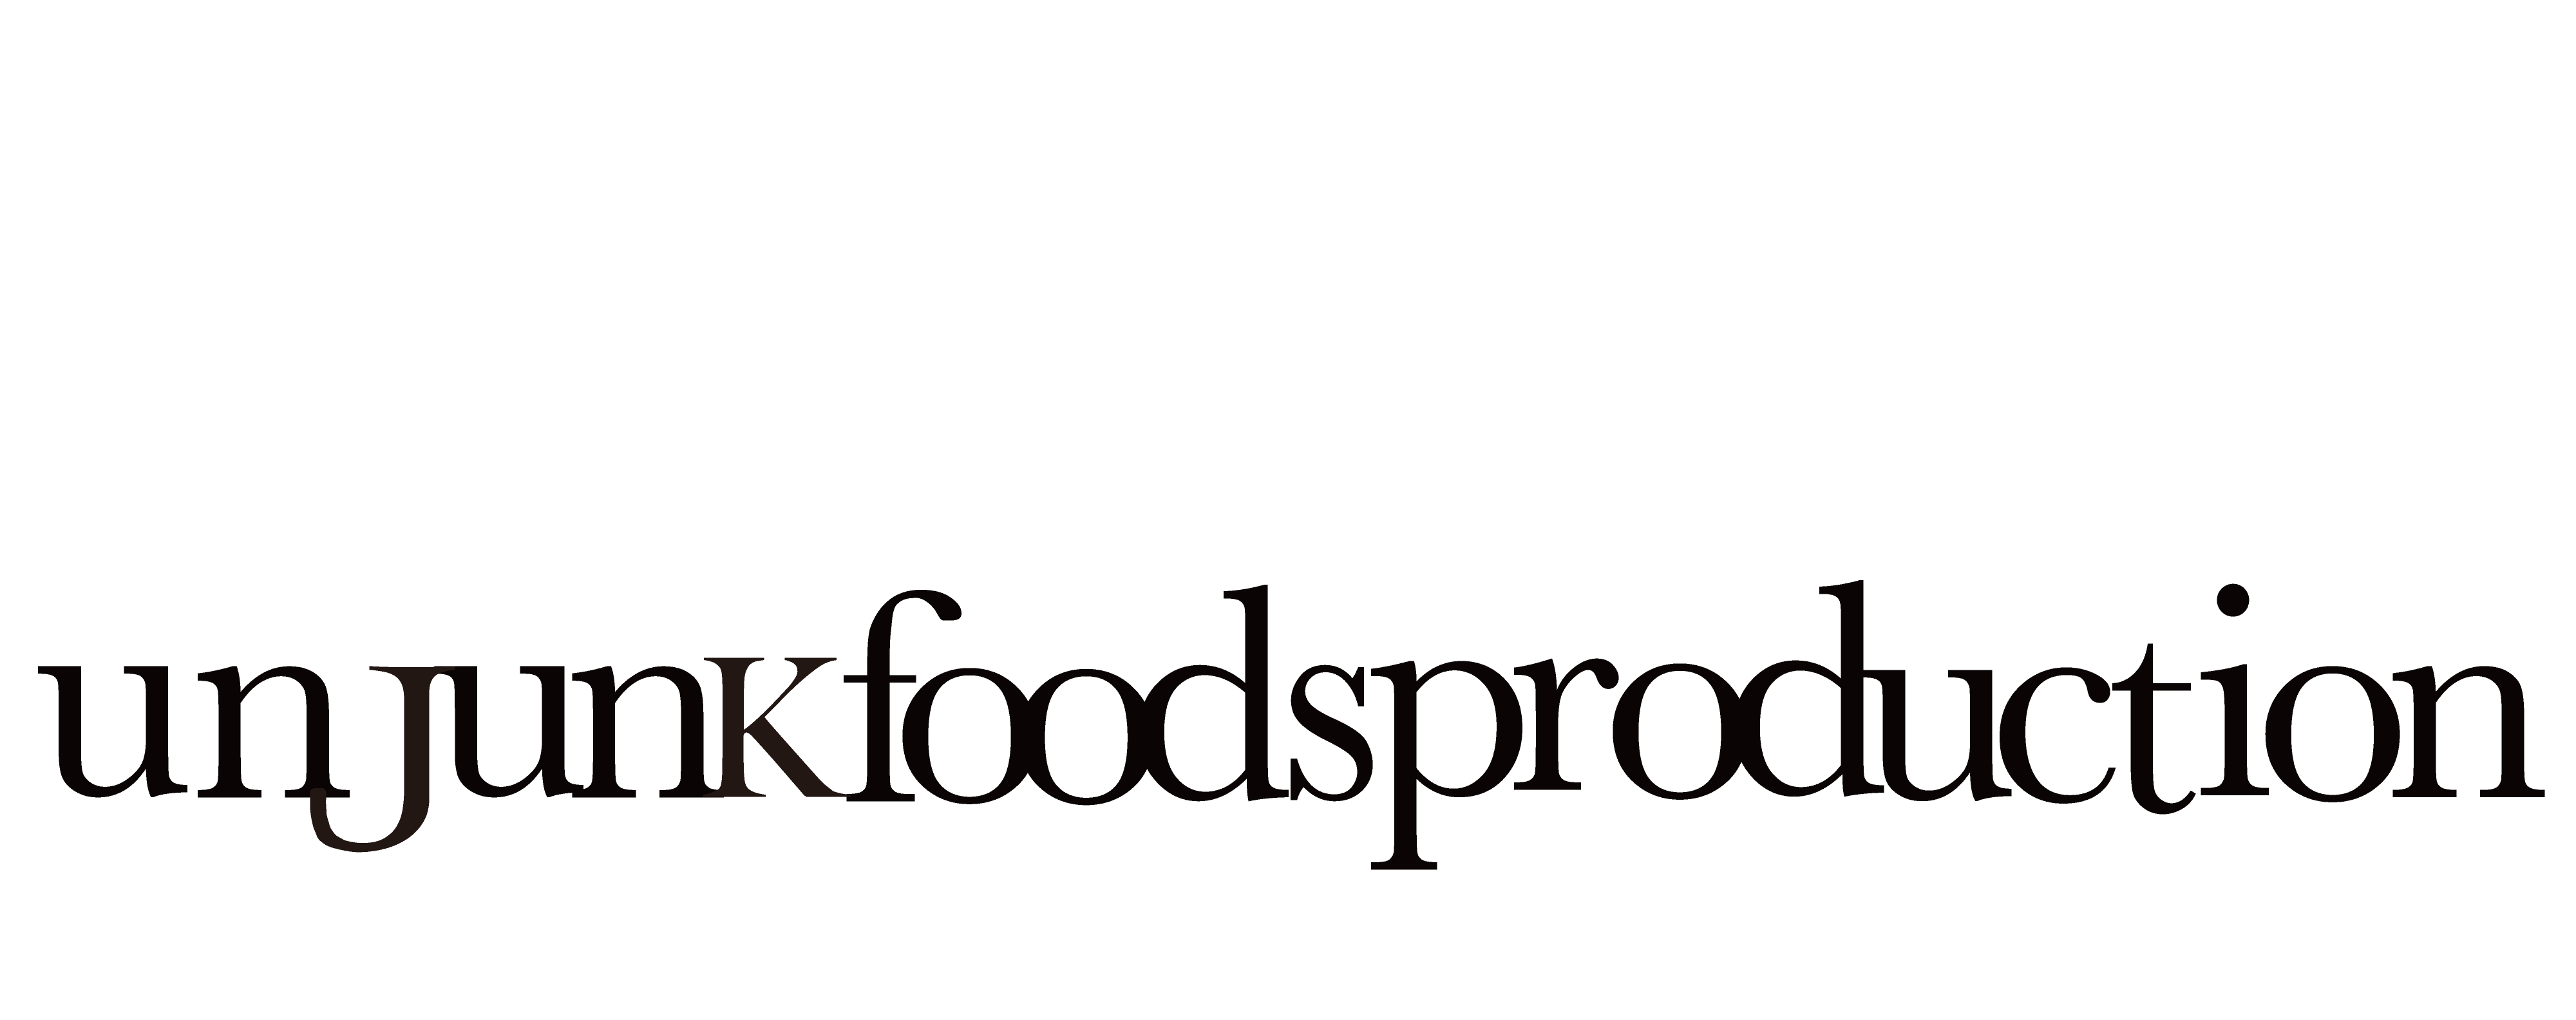 unjunk foods production